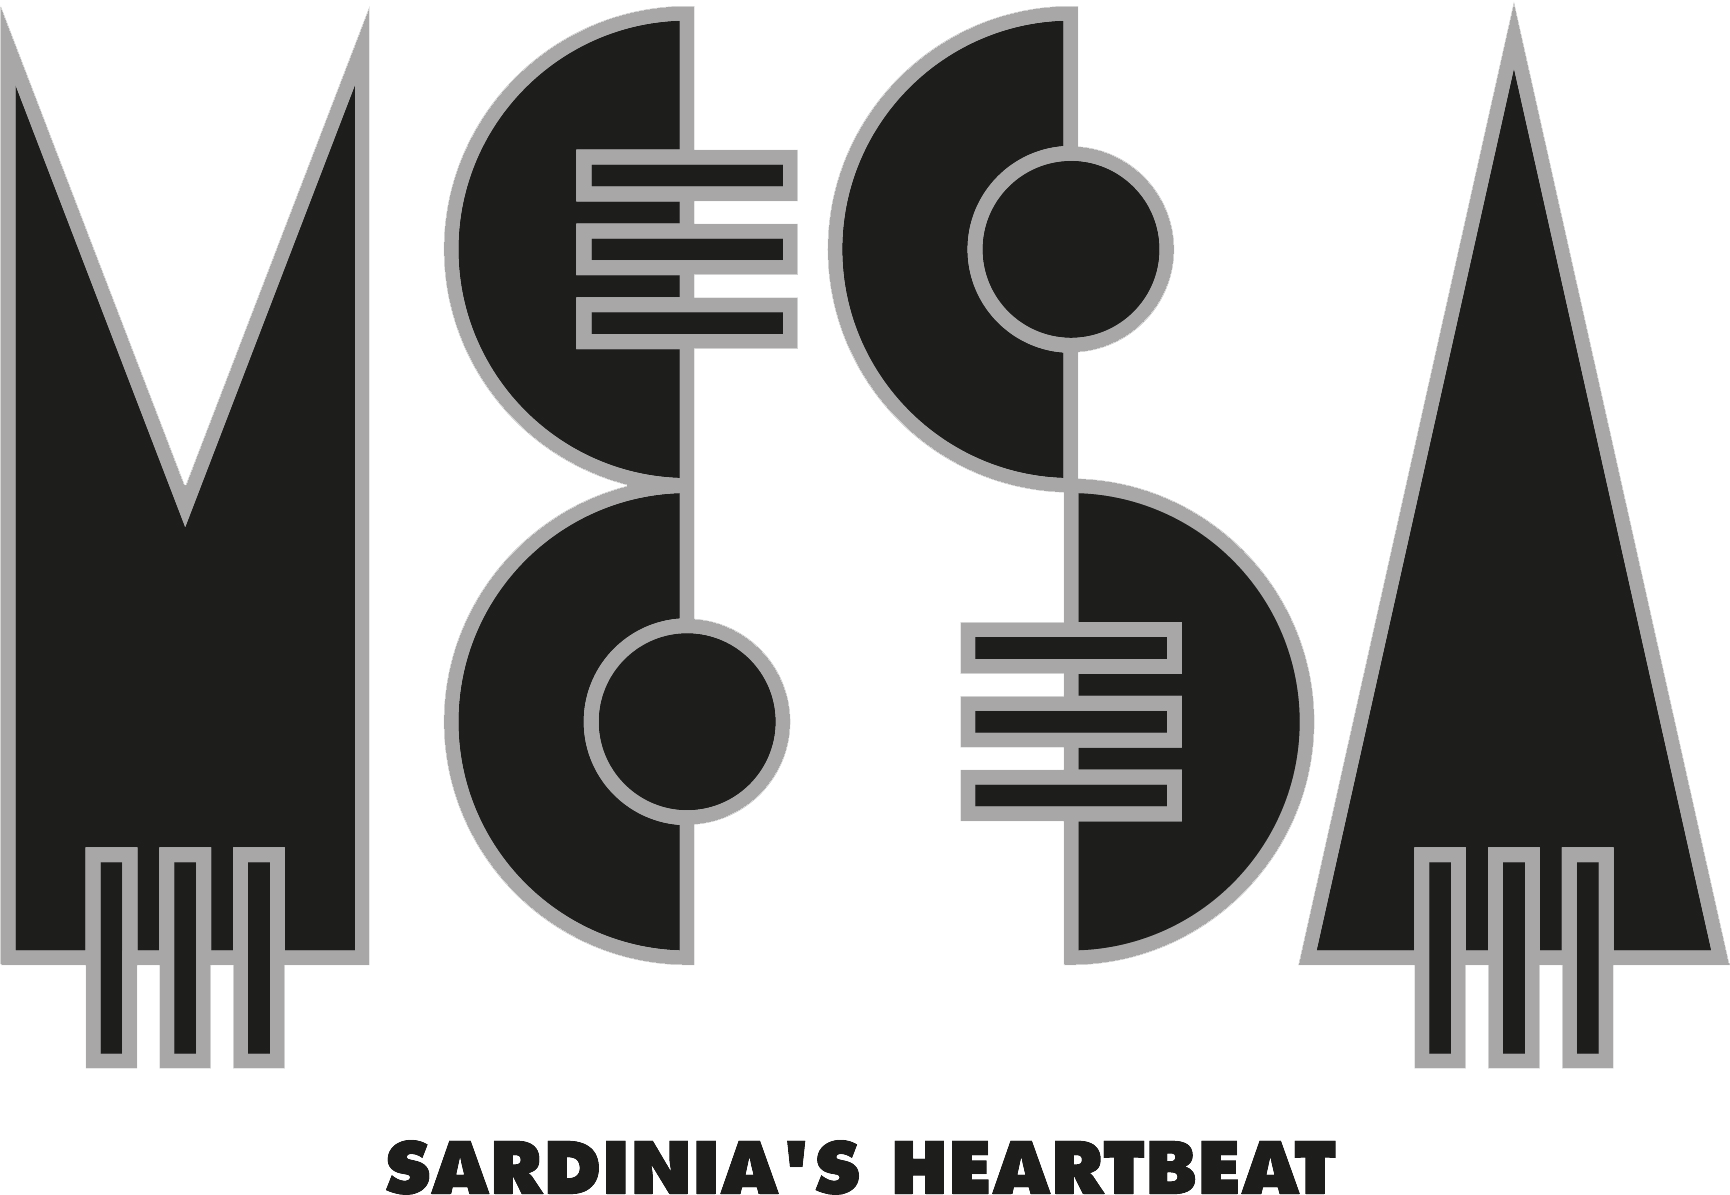 Logo Mesa